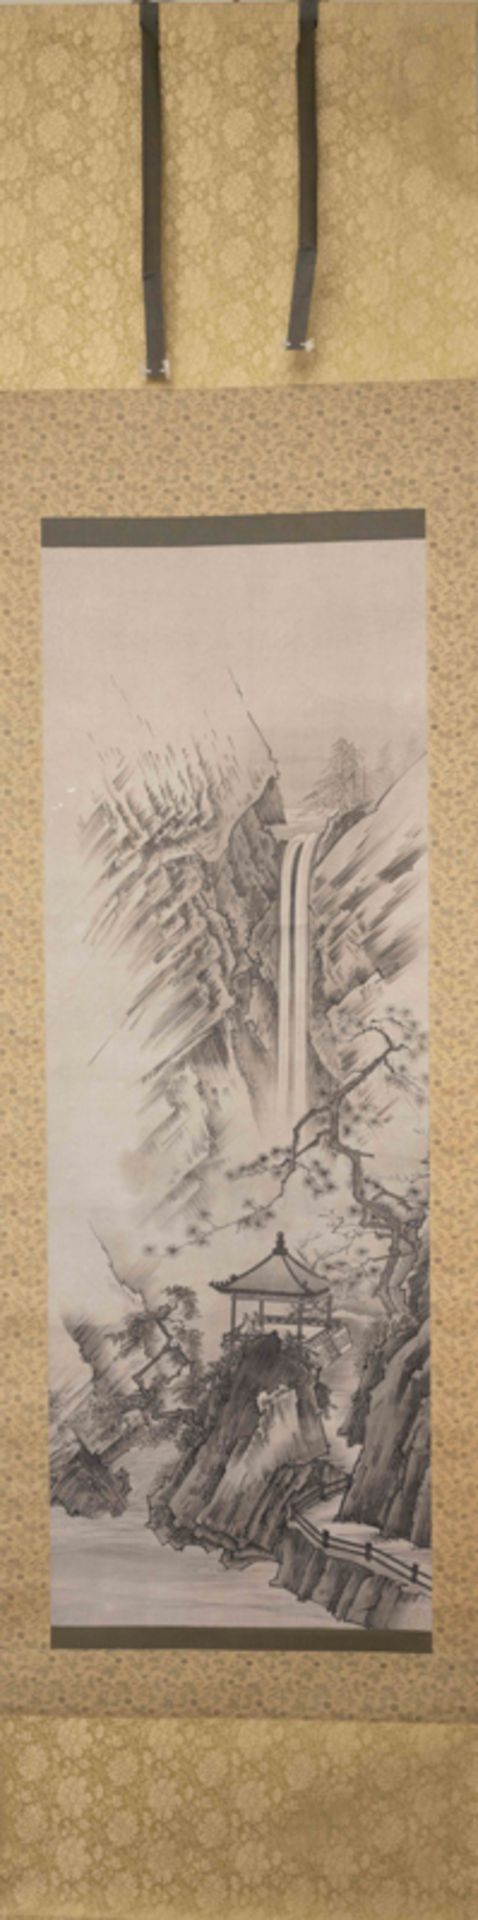 ZHOU WEN, A SET OF TWO hanging SCROLLS, LANDSCAPE 周文 山水樓閣雙條屏 - Image 2 of 17